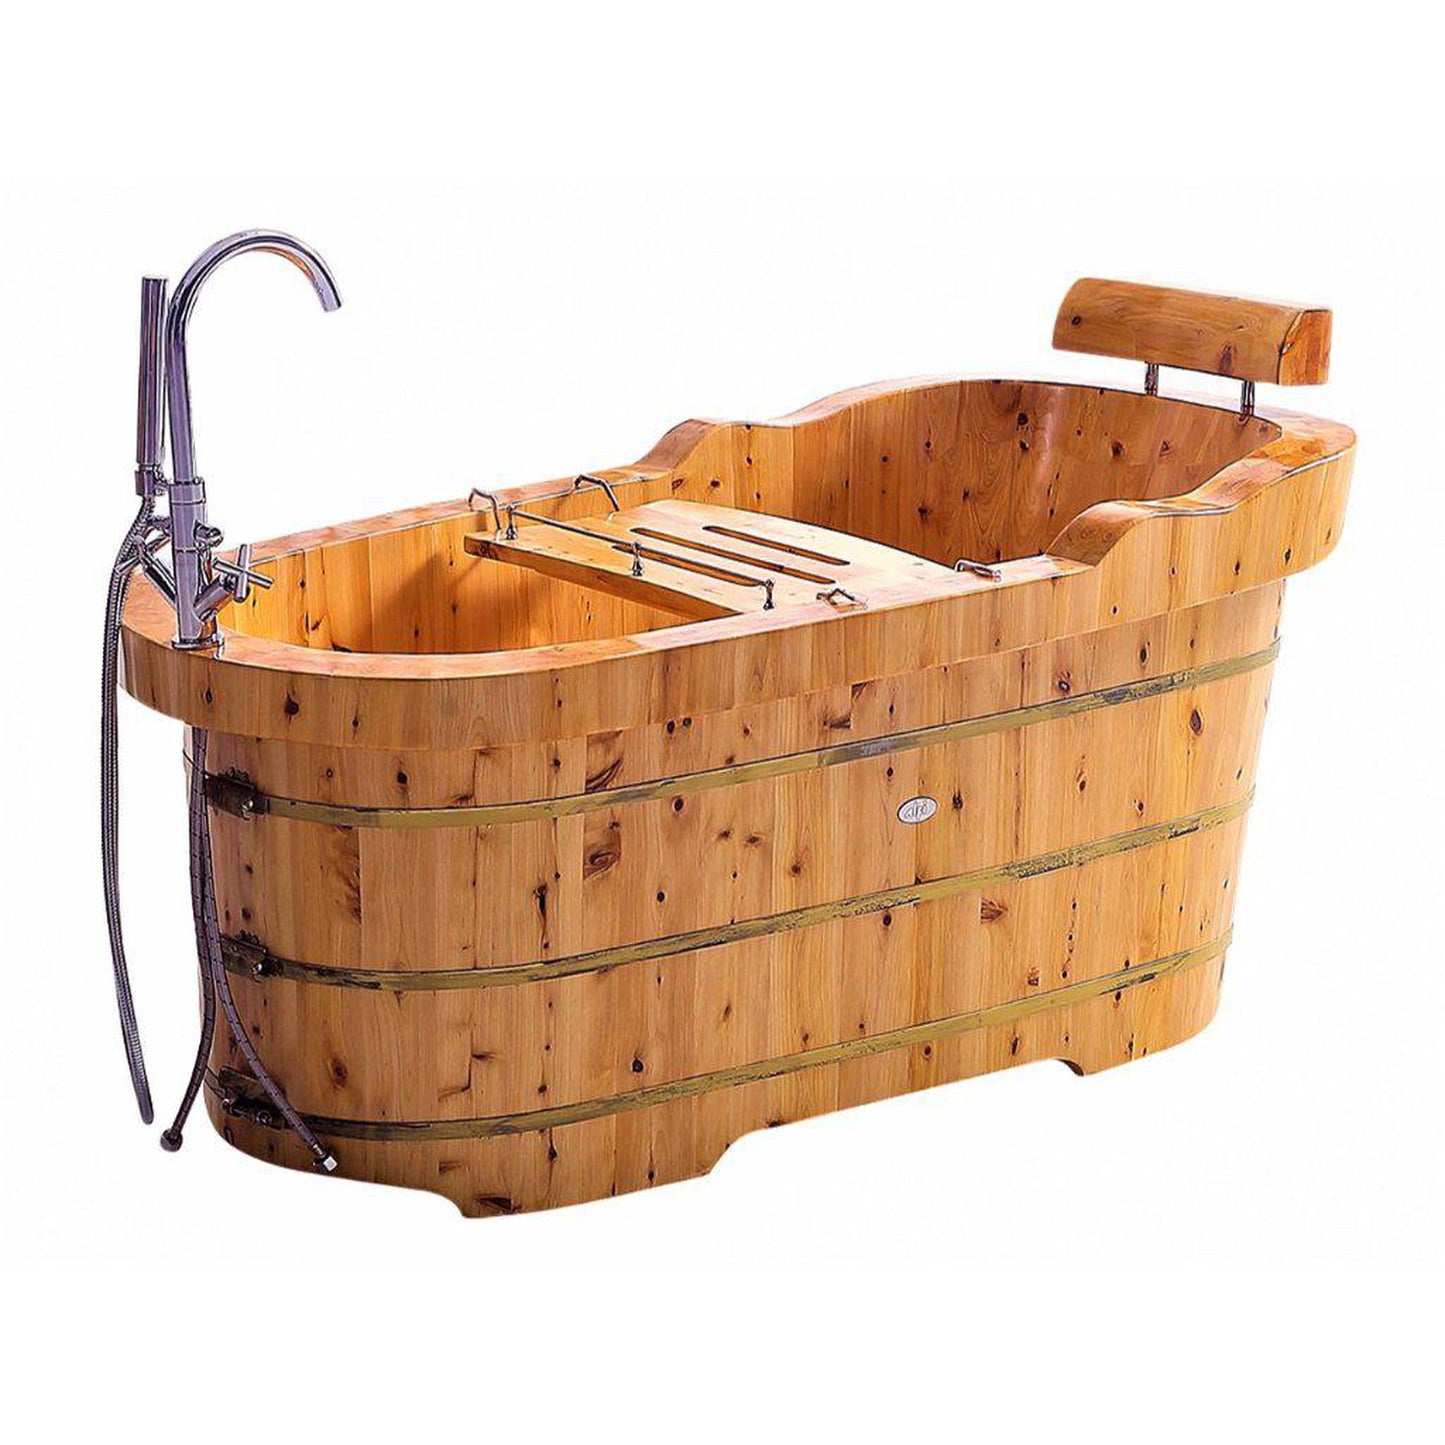 ALFI Brand AB1139 61" One Person Freestanding Soaking Cedar Wooden Bathtub With Fixtures & Headrest